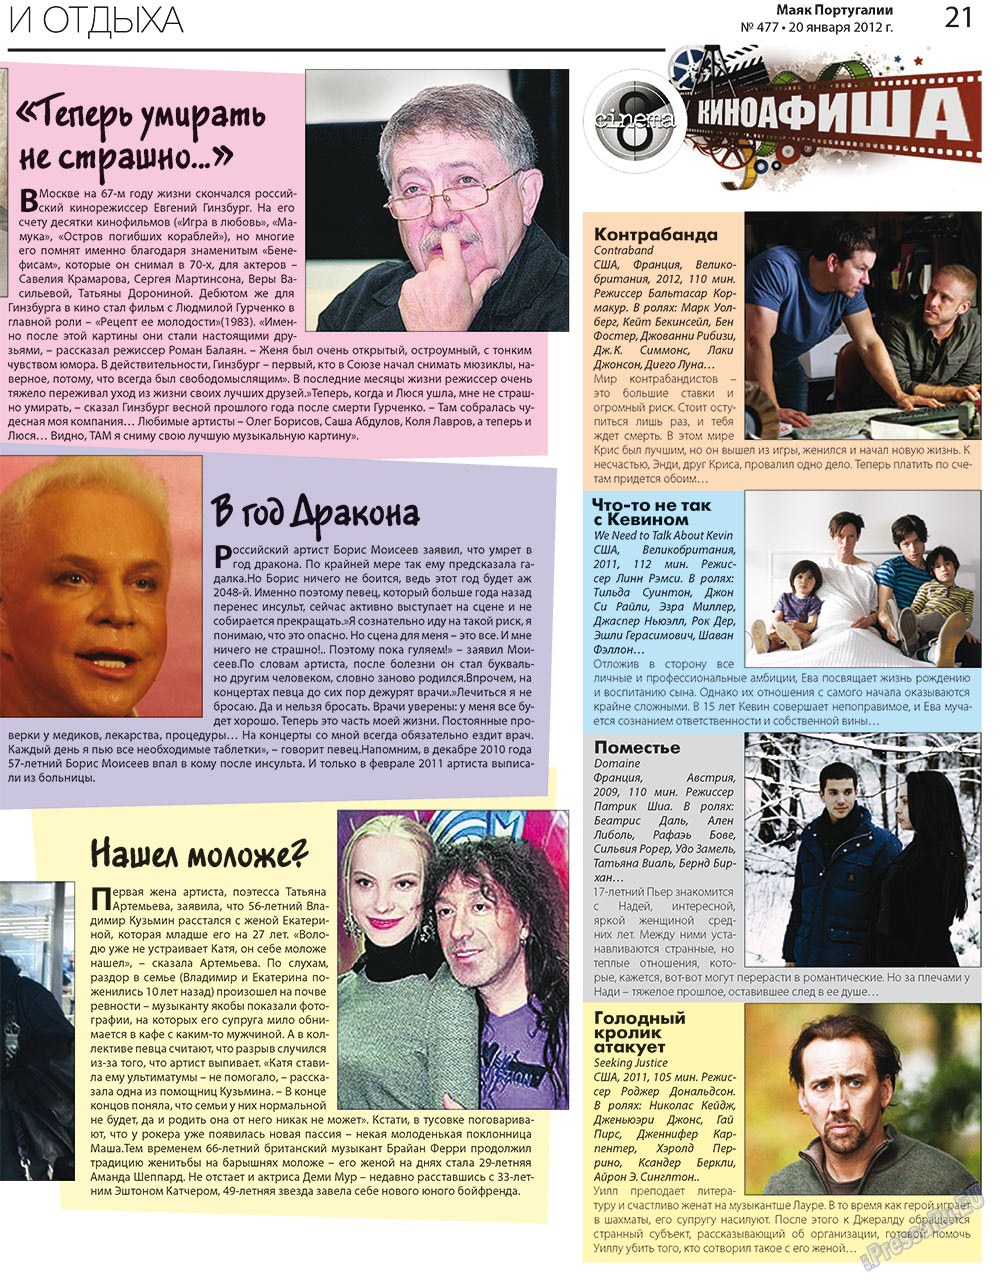 Маяк Португалии, газета. 2012 №477 стр.21